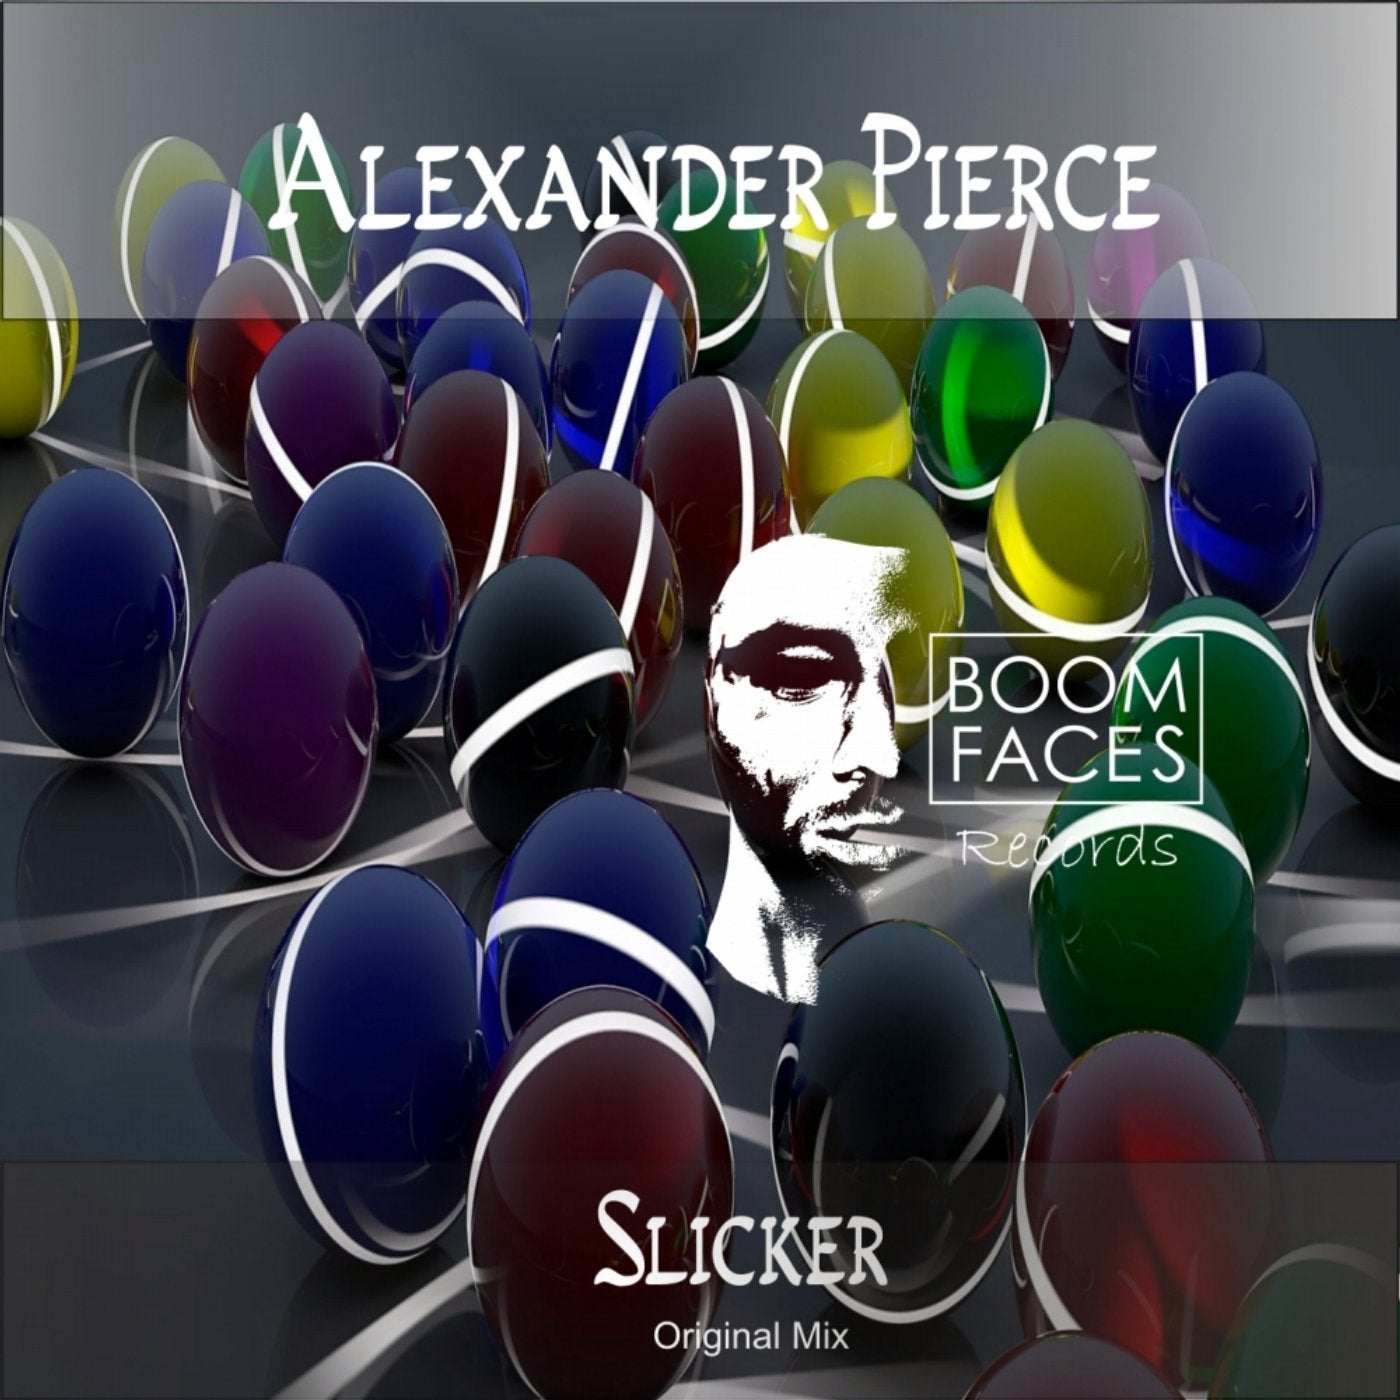 Retro alexander pierce remix. Alexander Pierce фото. Alexander Pierce - Rockets. Alexander Pierce 2018. Alexander Pierce музыкант.